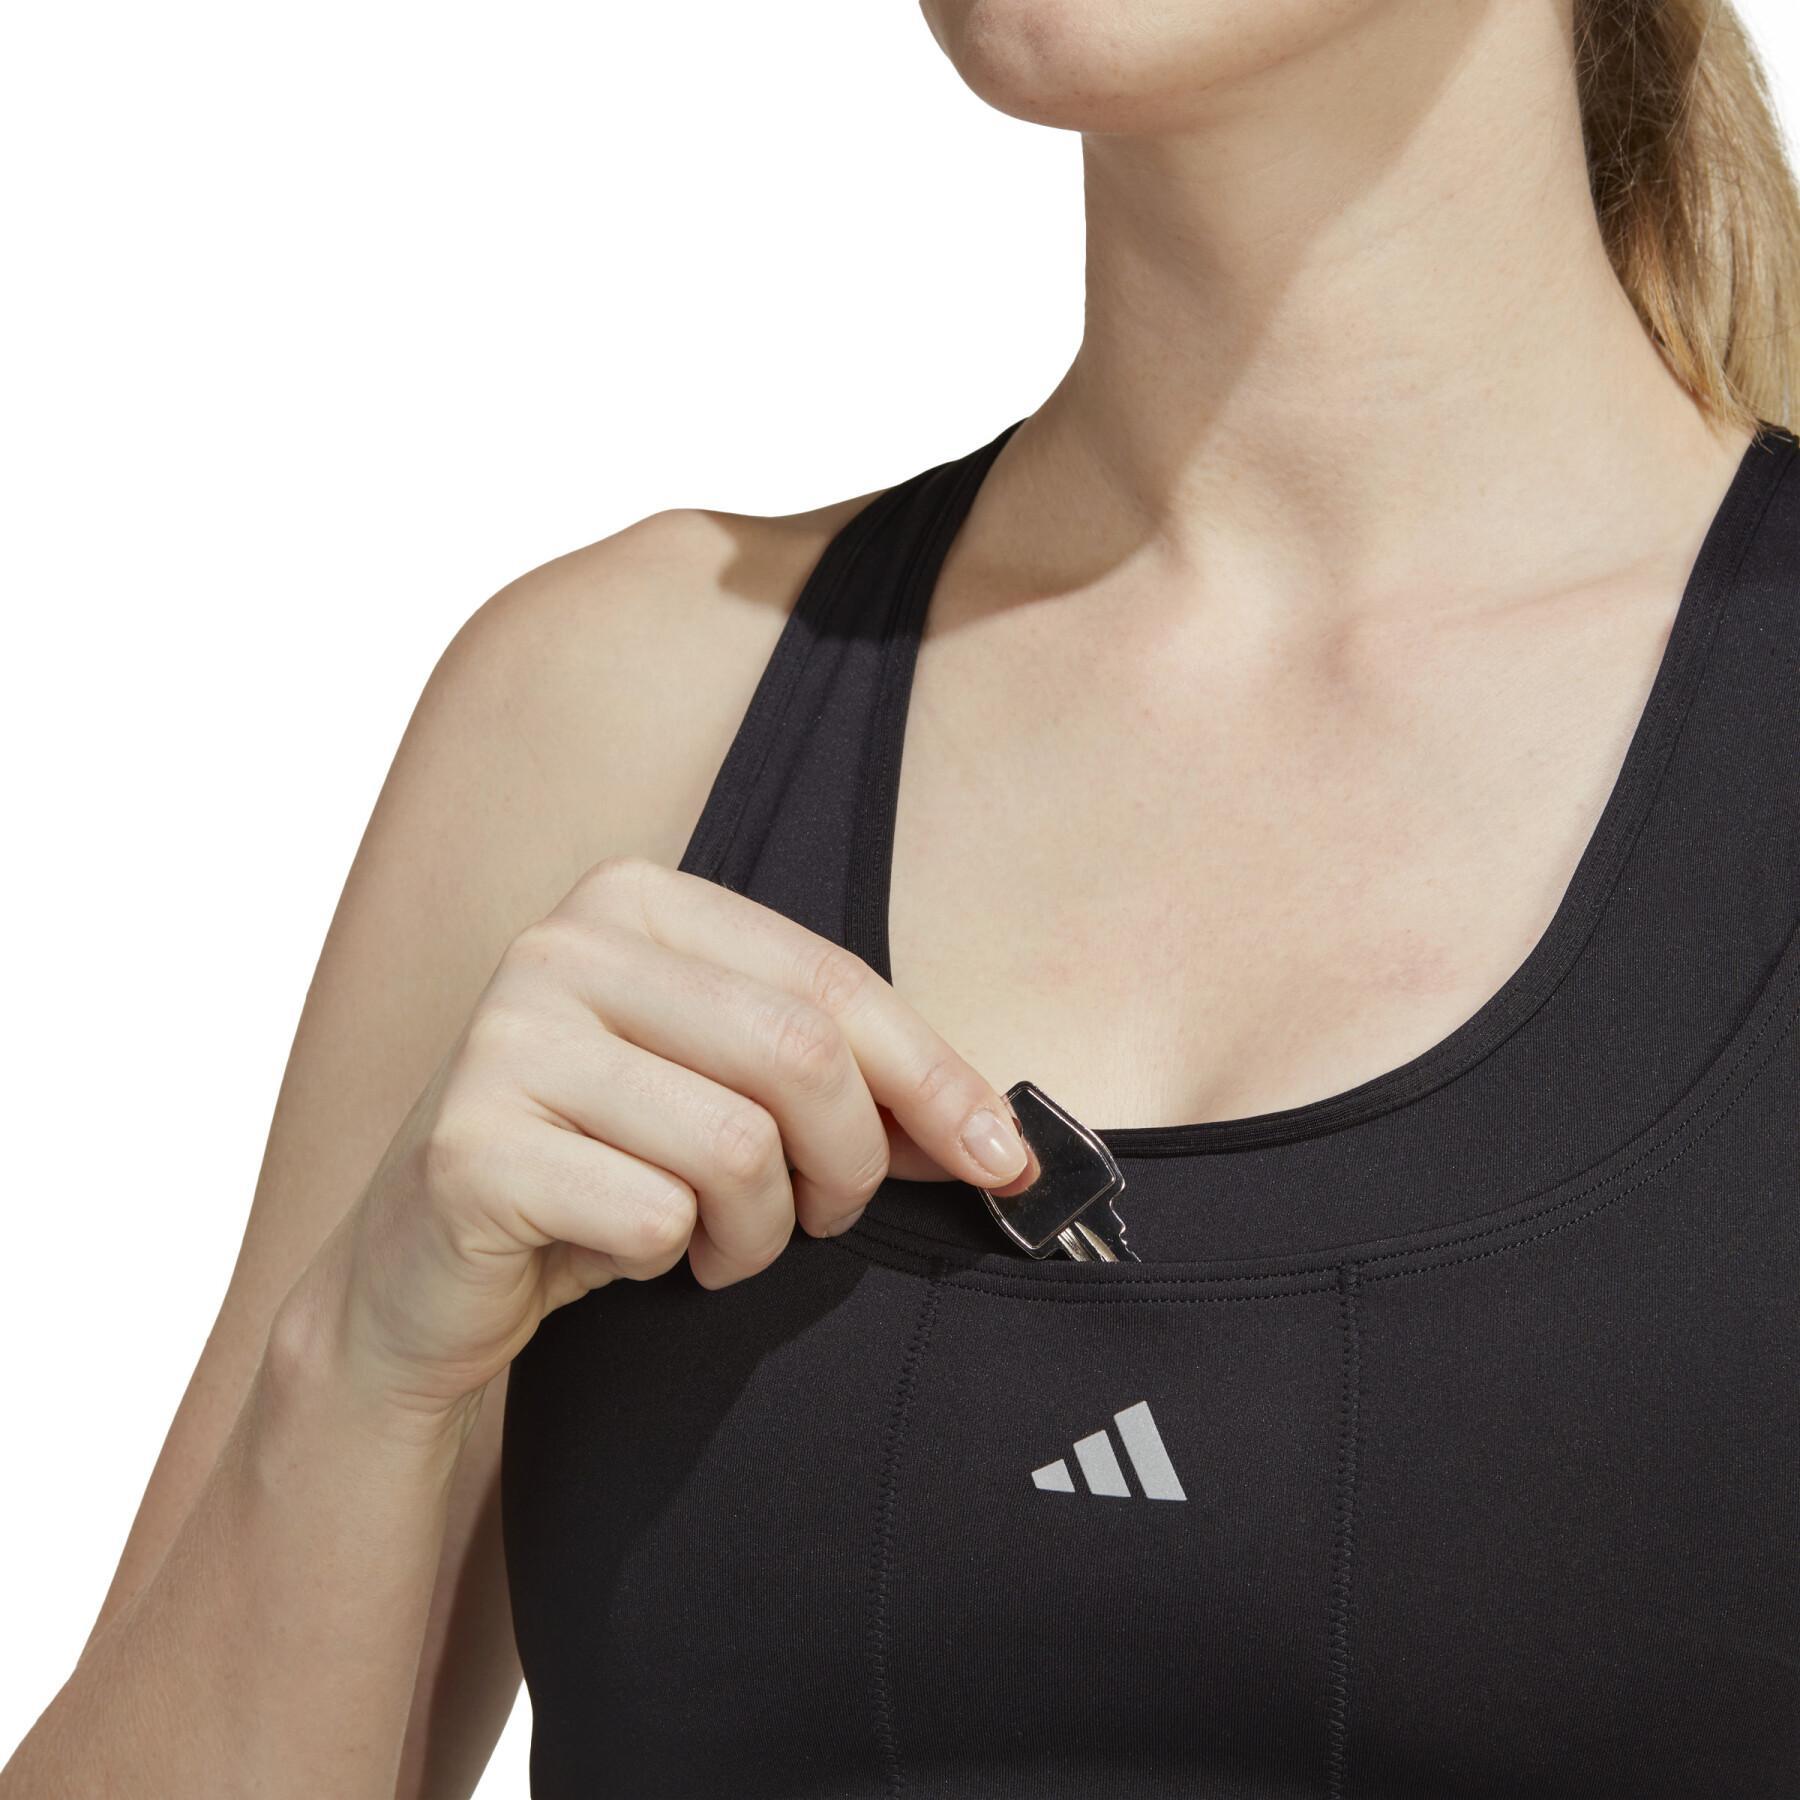 Medium support bra with women's pocket adidas